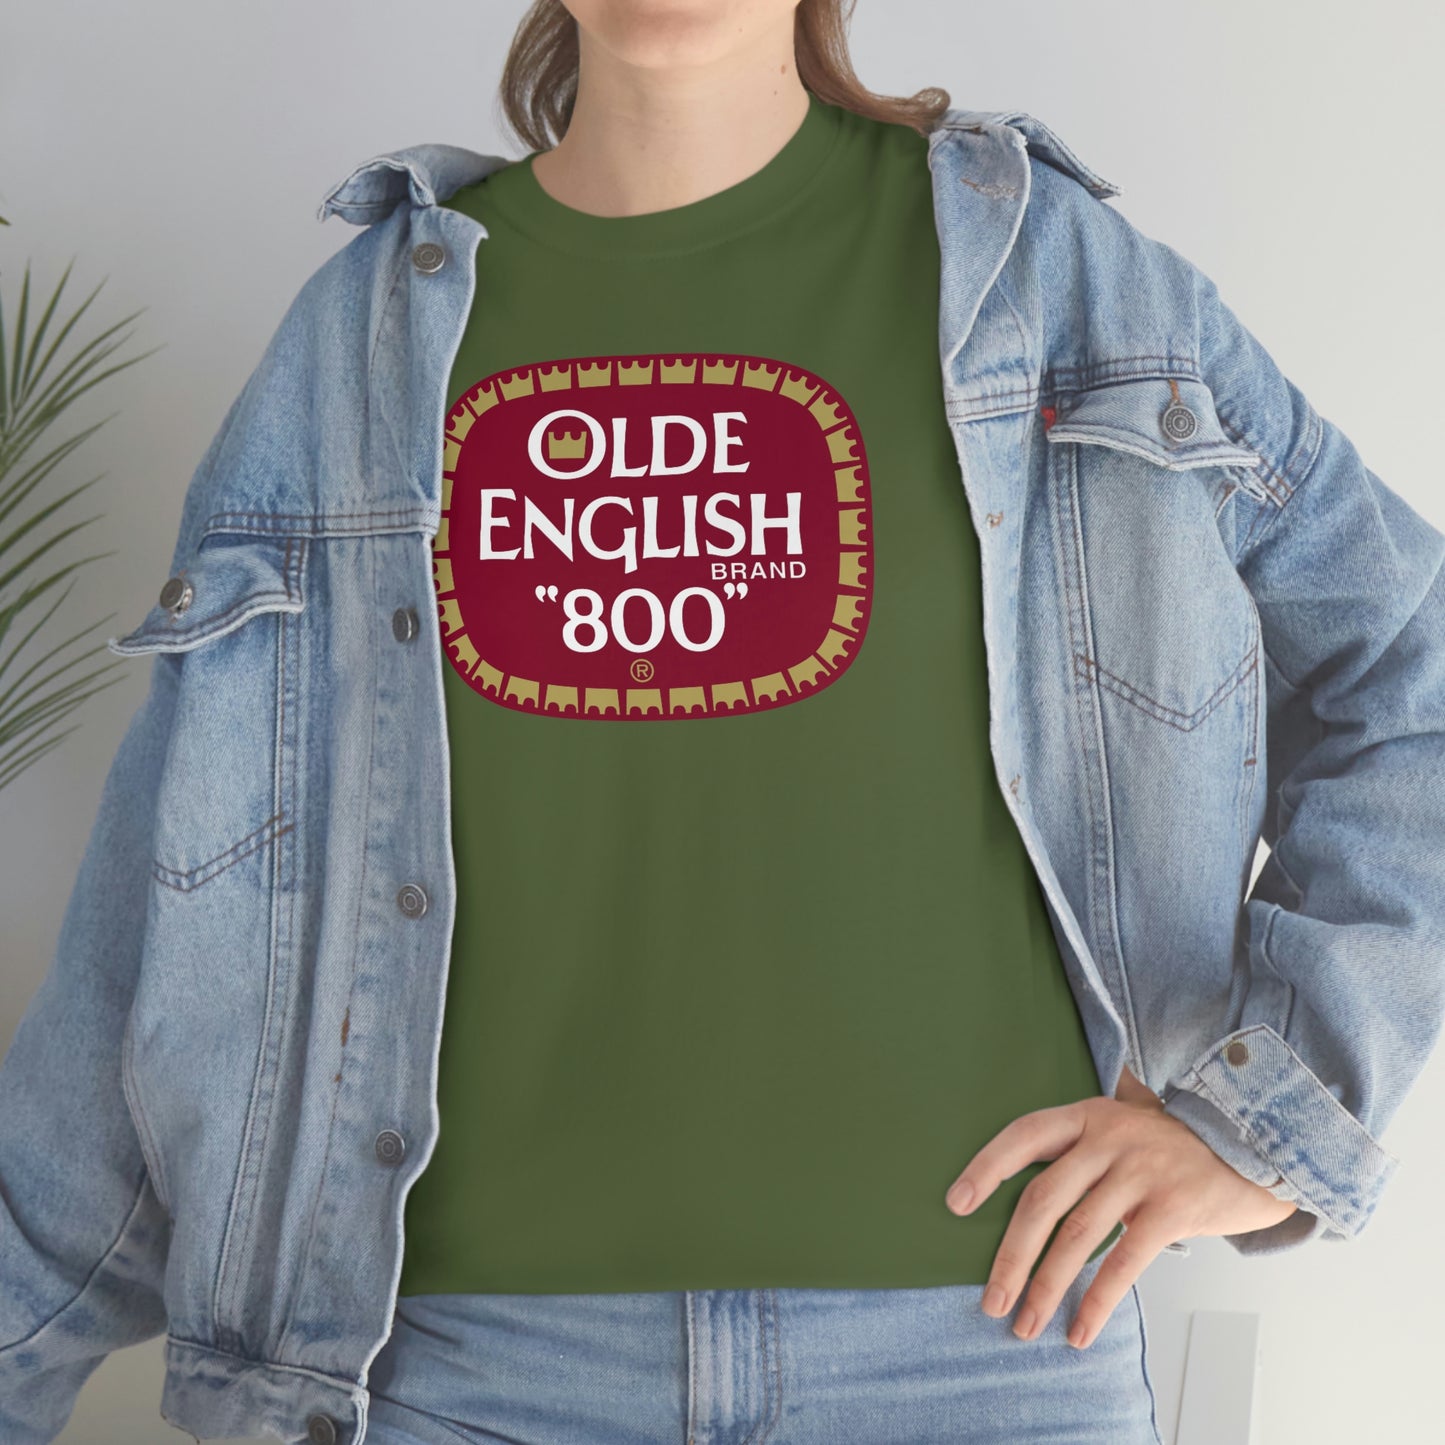 Old English 800 T-Shirt